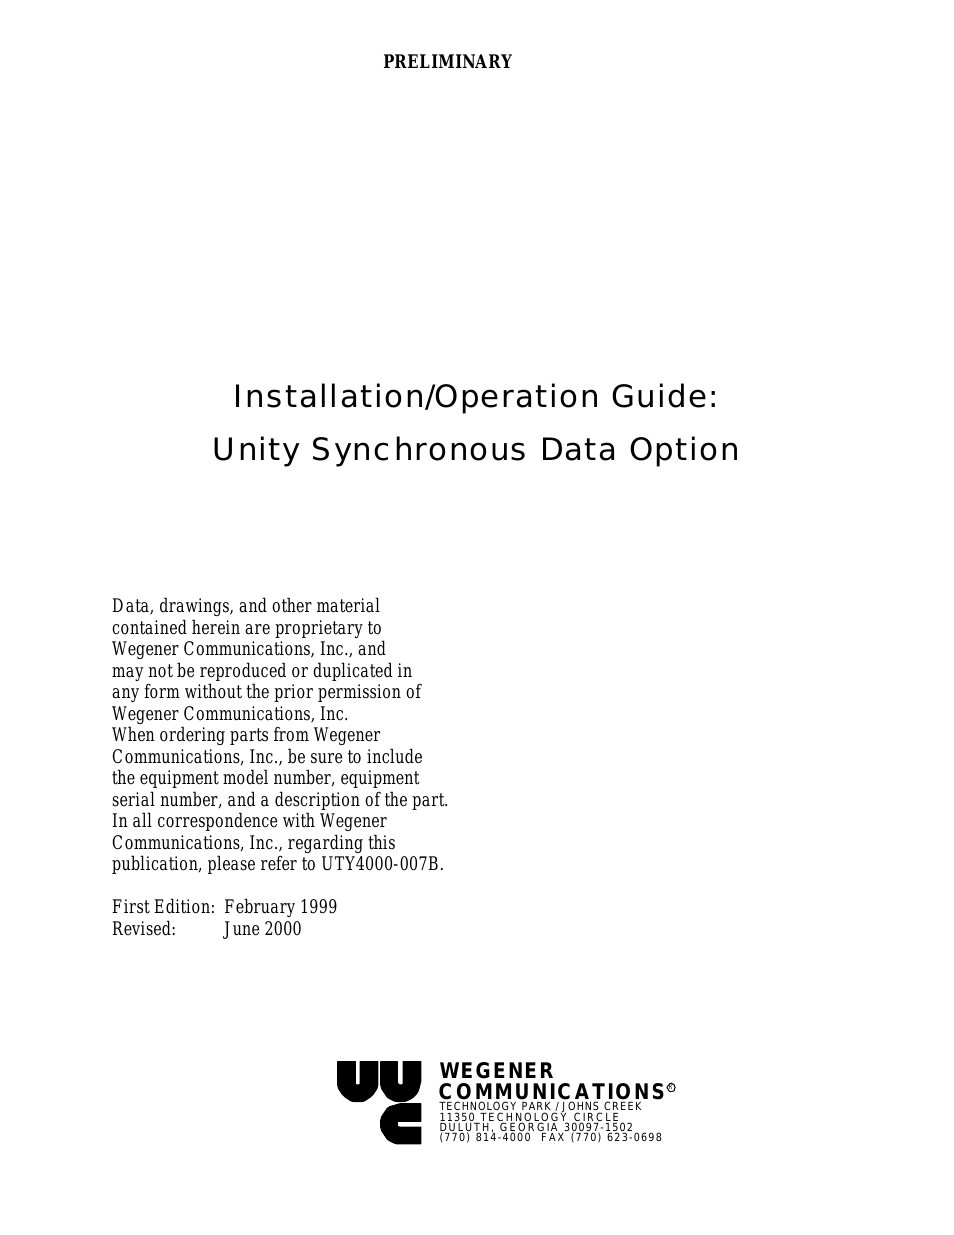 Unity Satellite Receiver Model Unity Synchronous Data Option